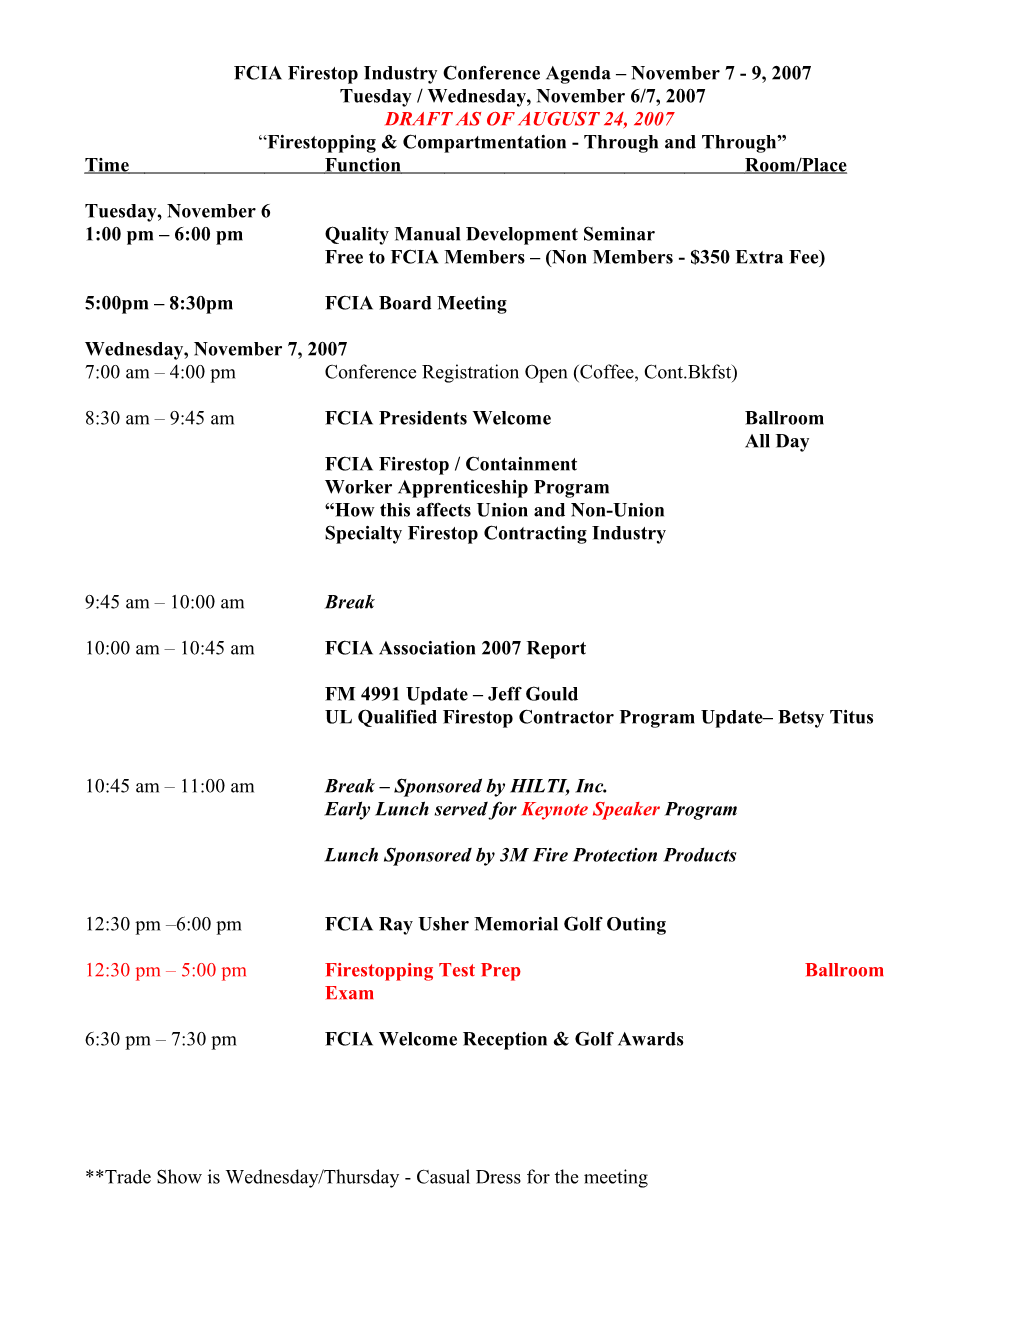 FCIA Industry Conference Agenda November 6-8, 2002